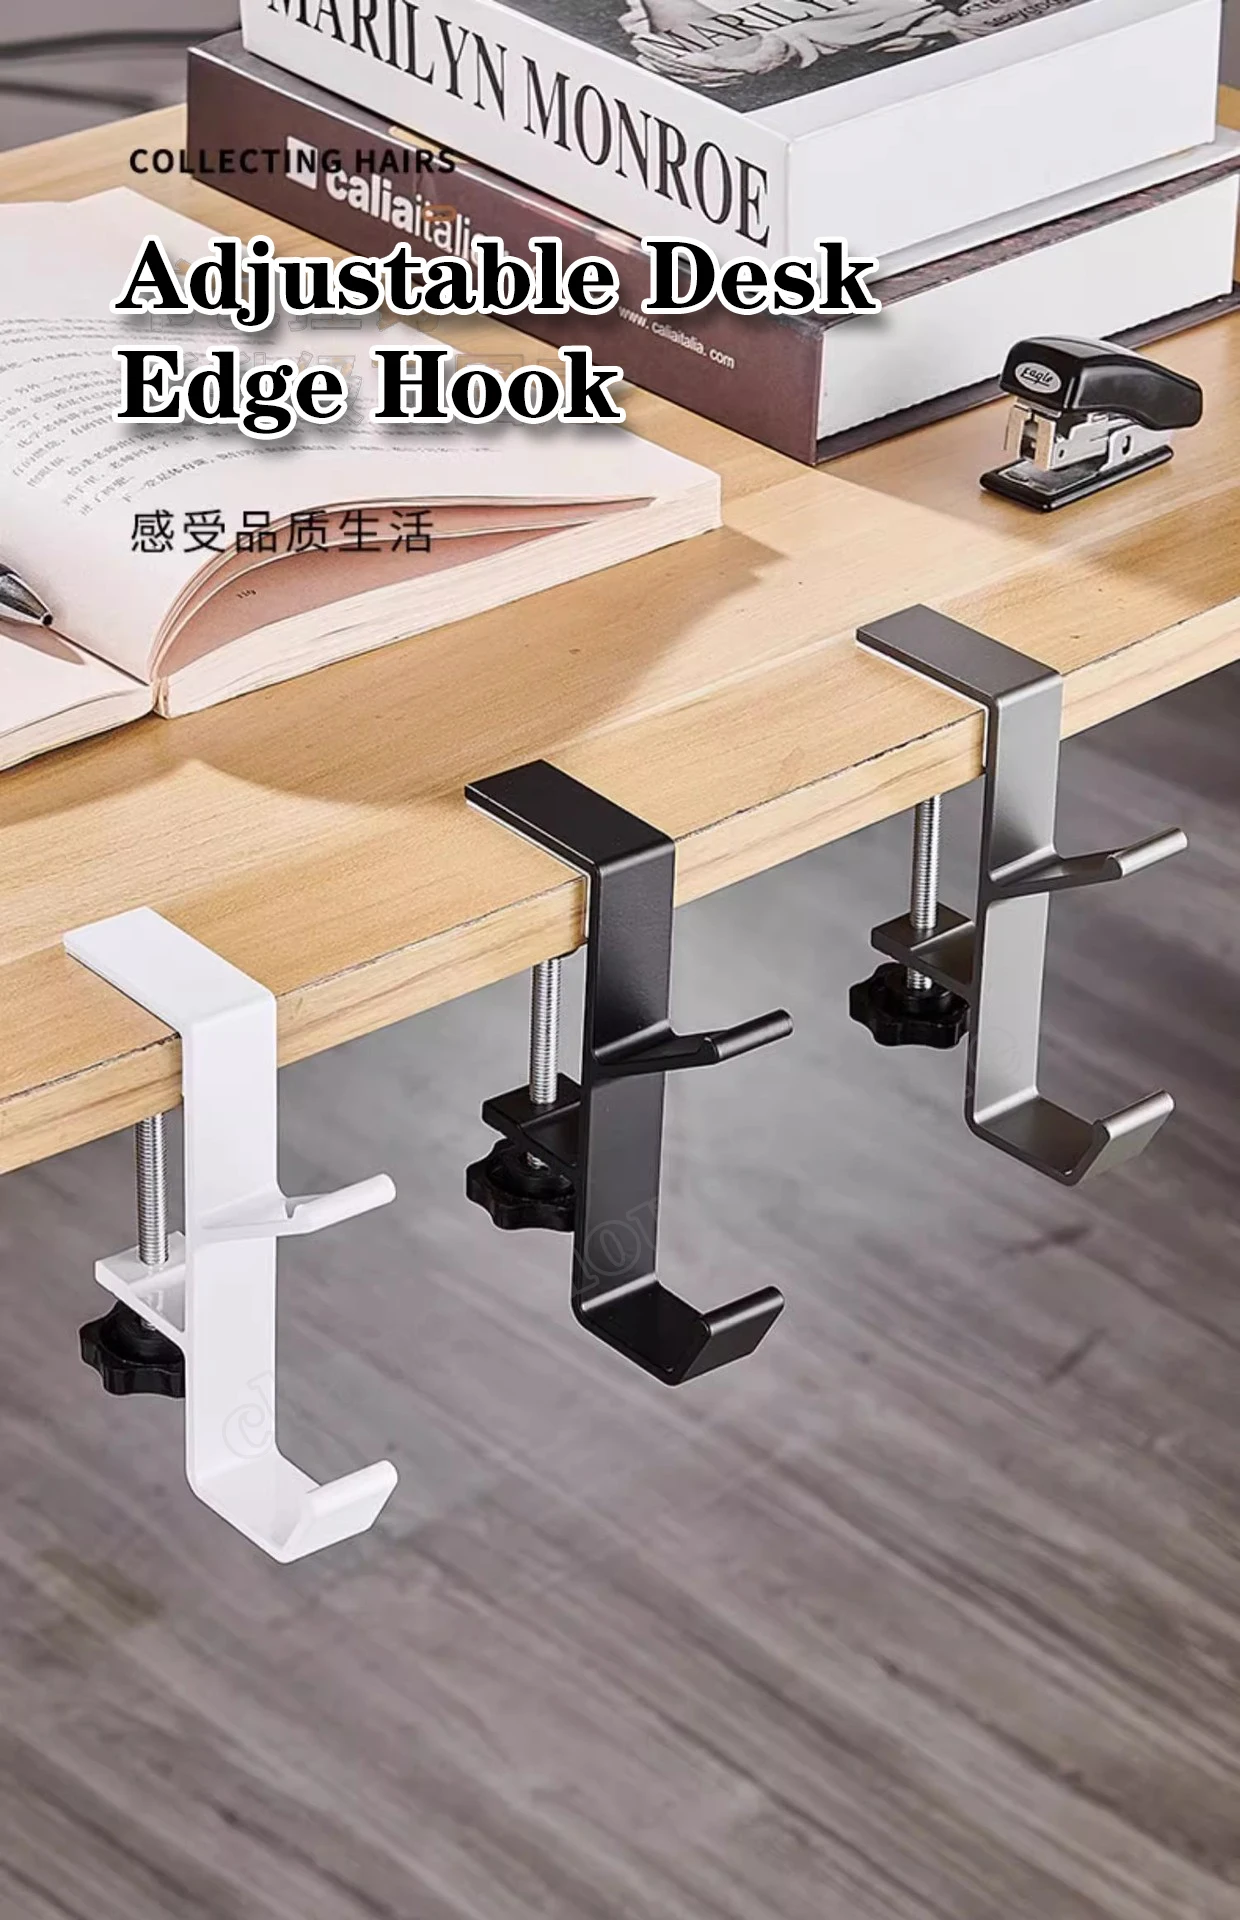 Multi-function Adjustable Desk Edge Hook Portable Headphone Stand Desktop Headset Holder Punch Free Home Office Desk Edge Hanger